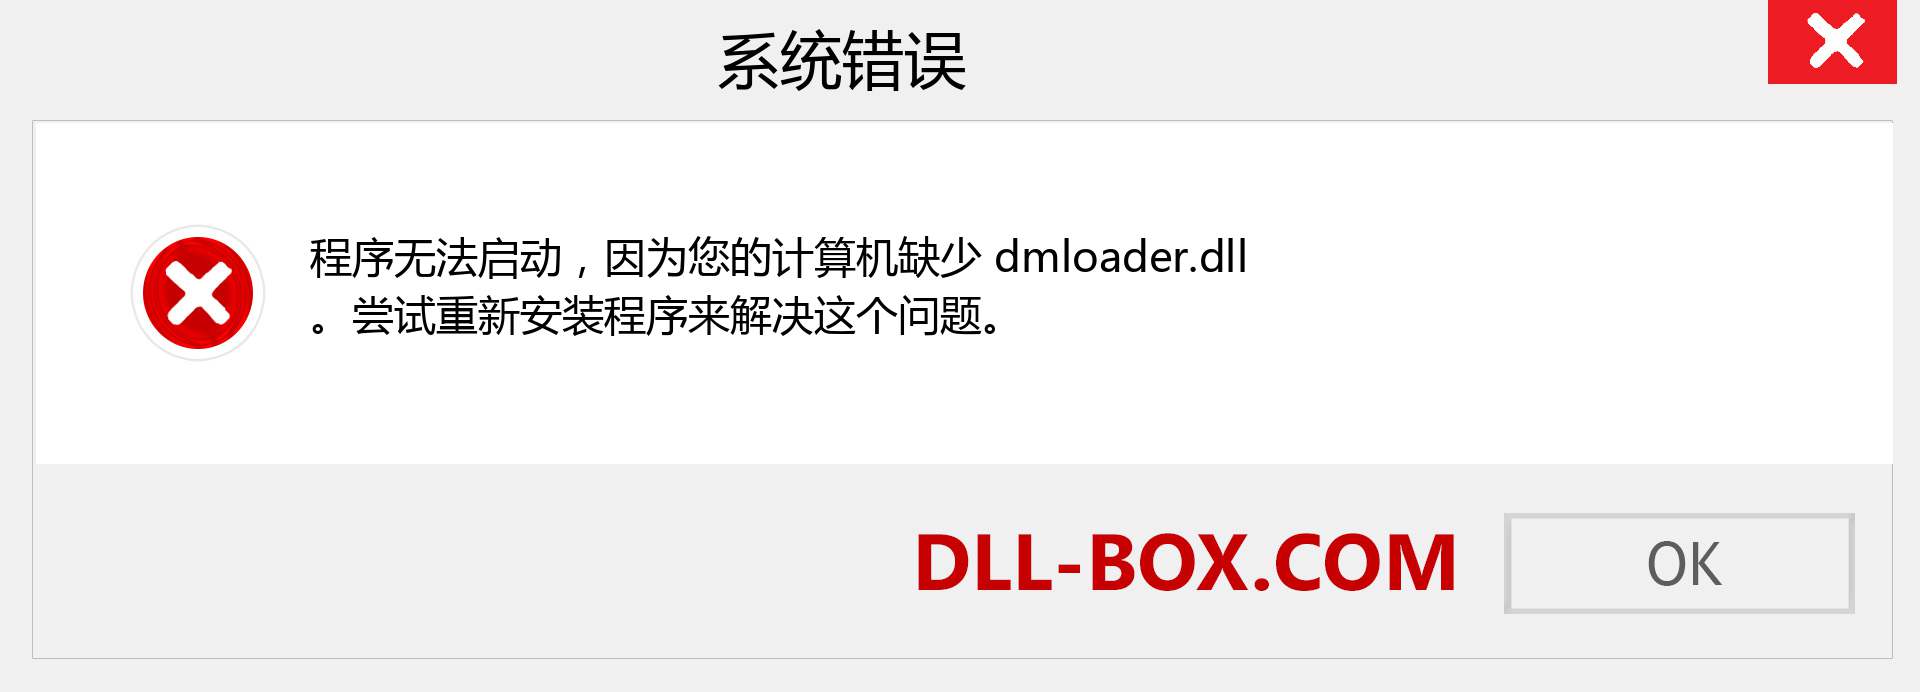 dmloader.dll 文件丢失？。 适用于 Windows 7、8、10 的下载 - 修复 Windows、照片、图像上的 dmloader dll 丢失错误